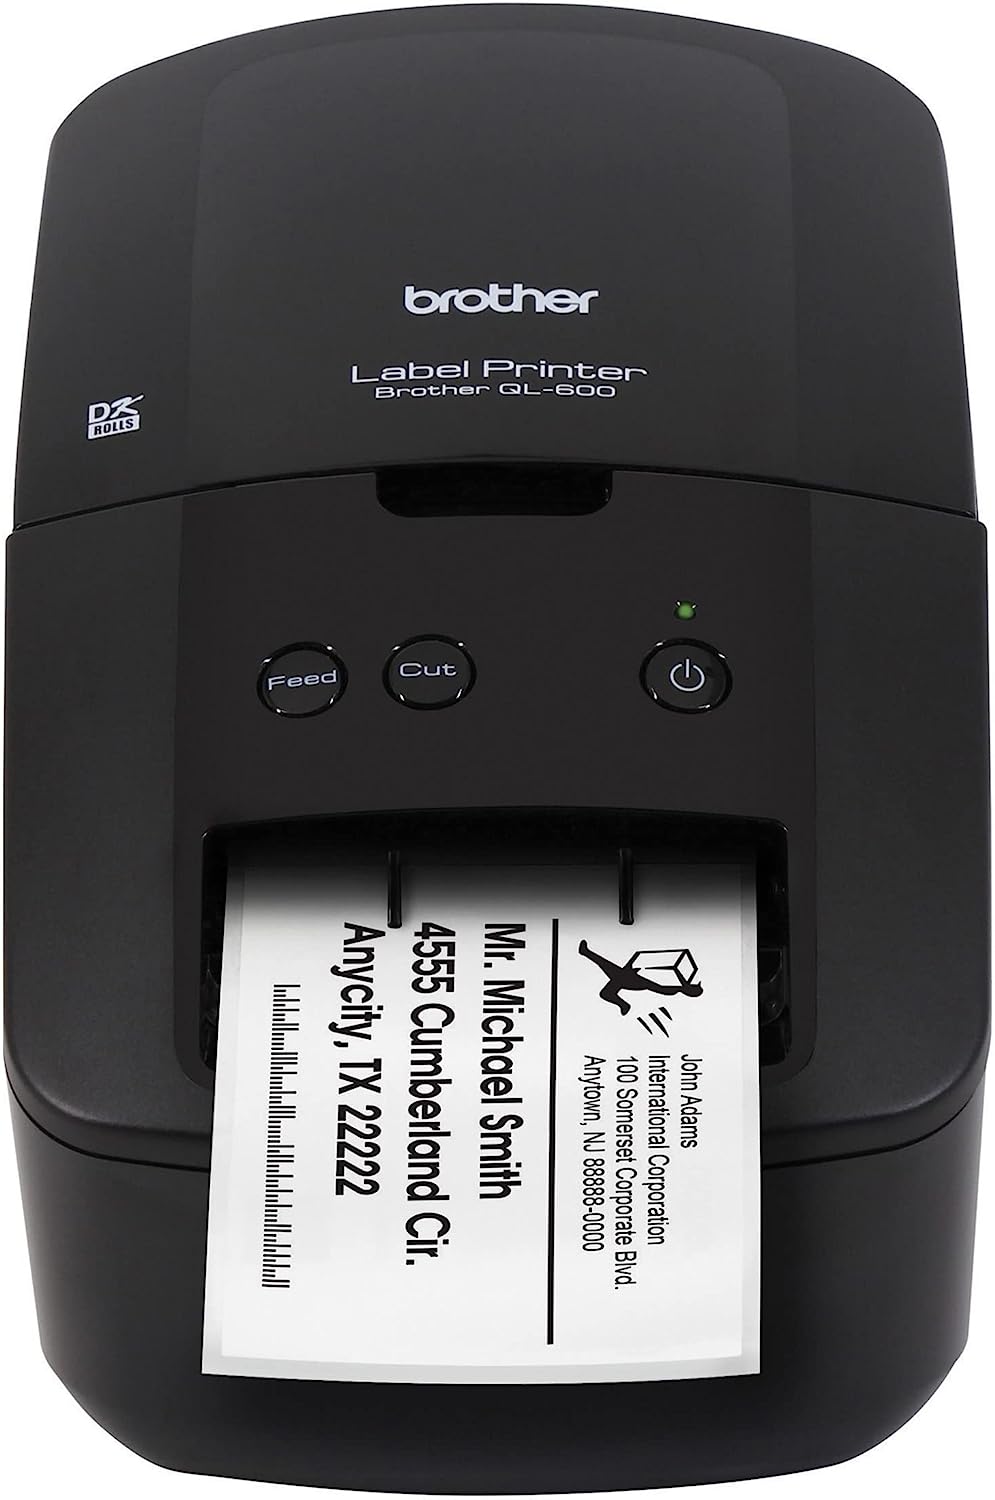 BROTHER Impresora de Etiquetas de computadora económica QL-600, QL600, 2.4 Pulgadas de Ancho de Etiqueta